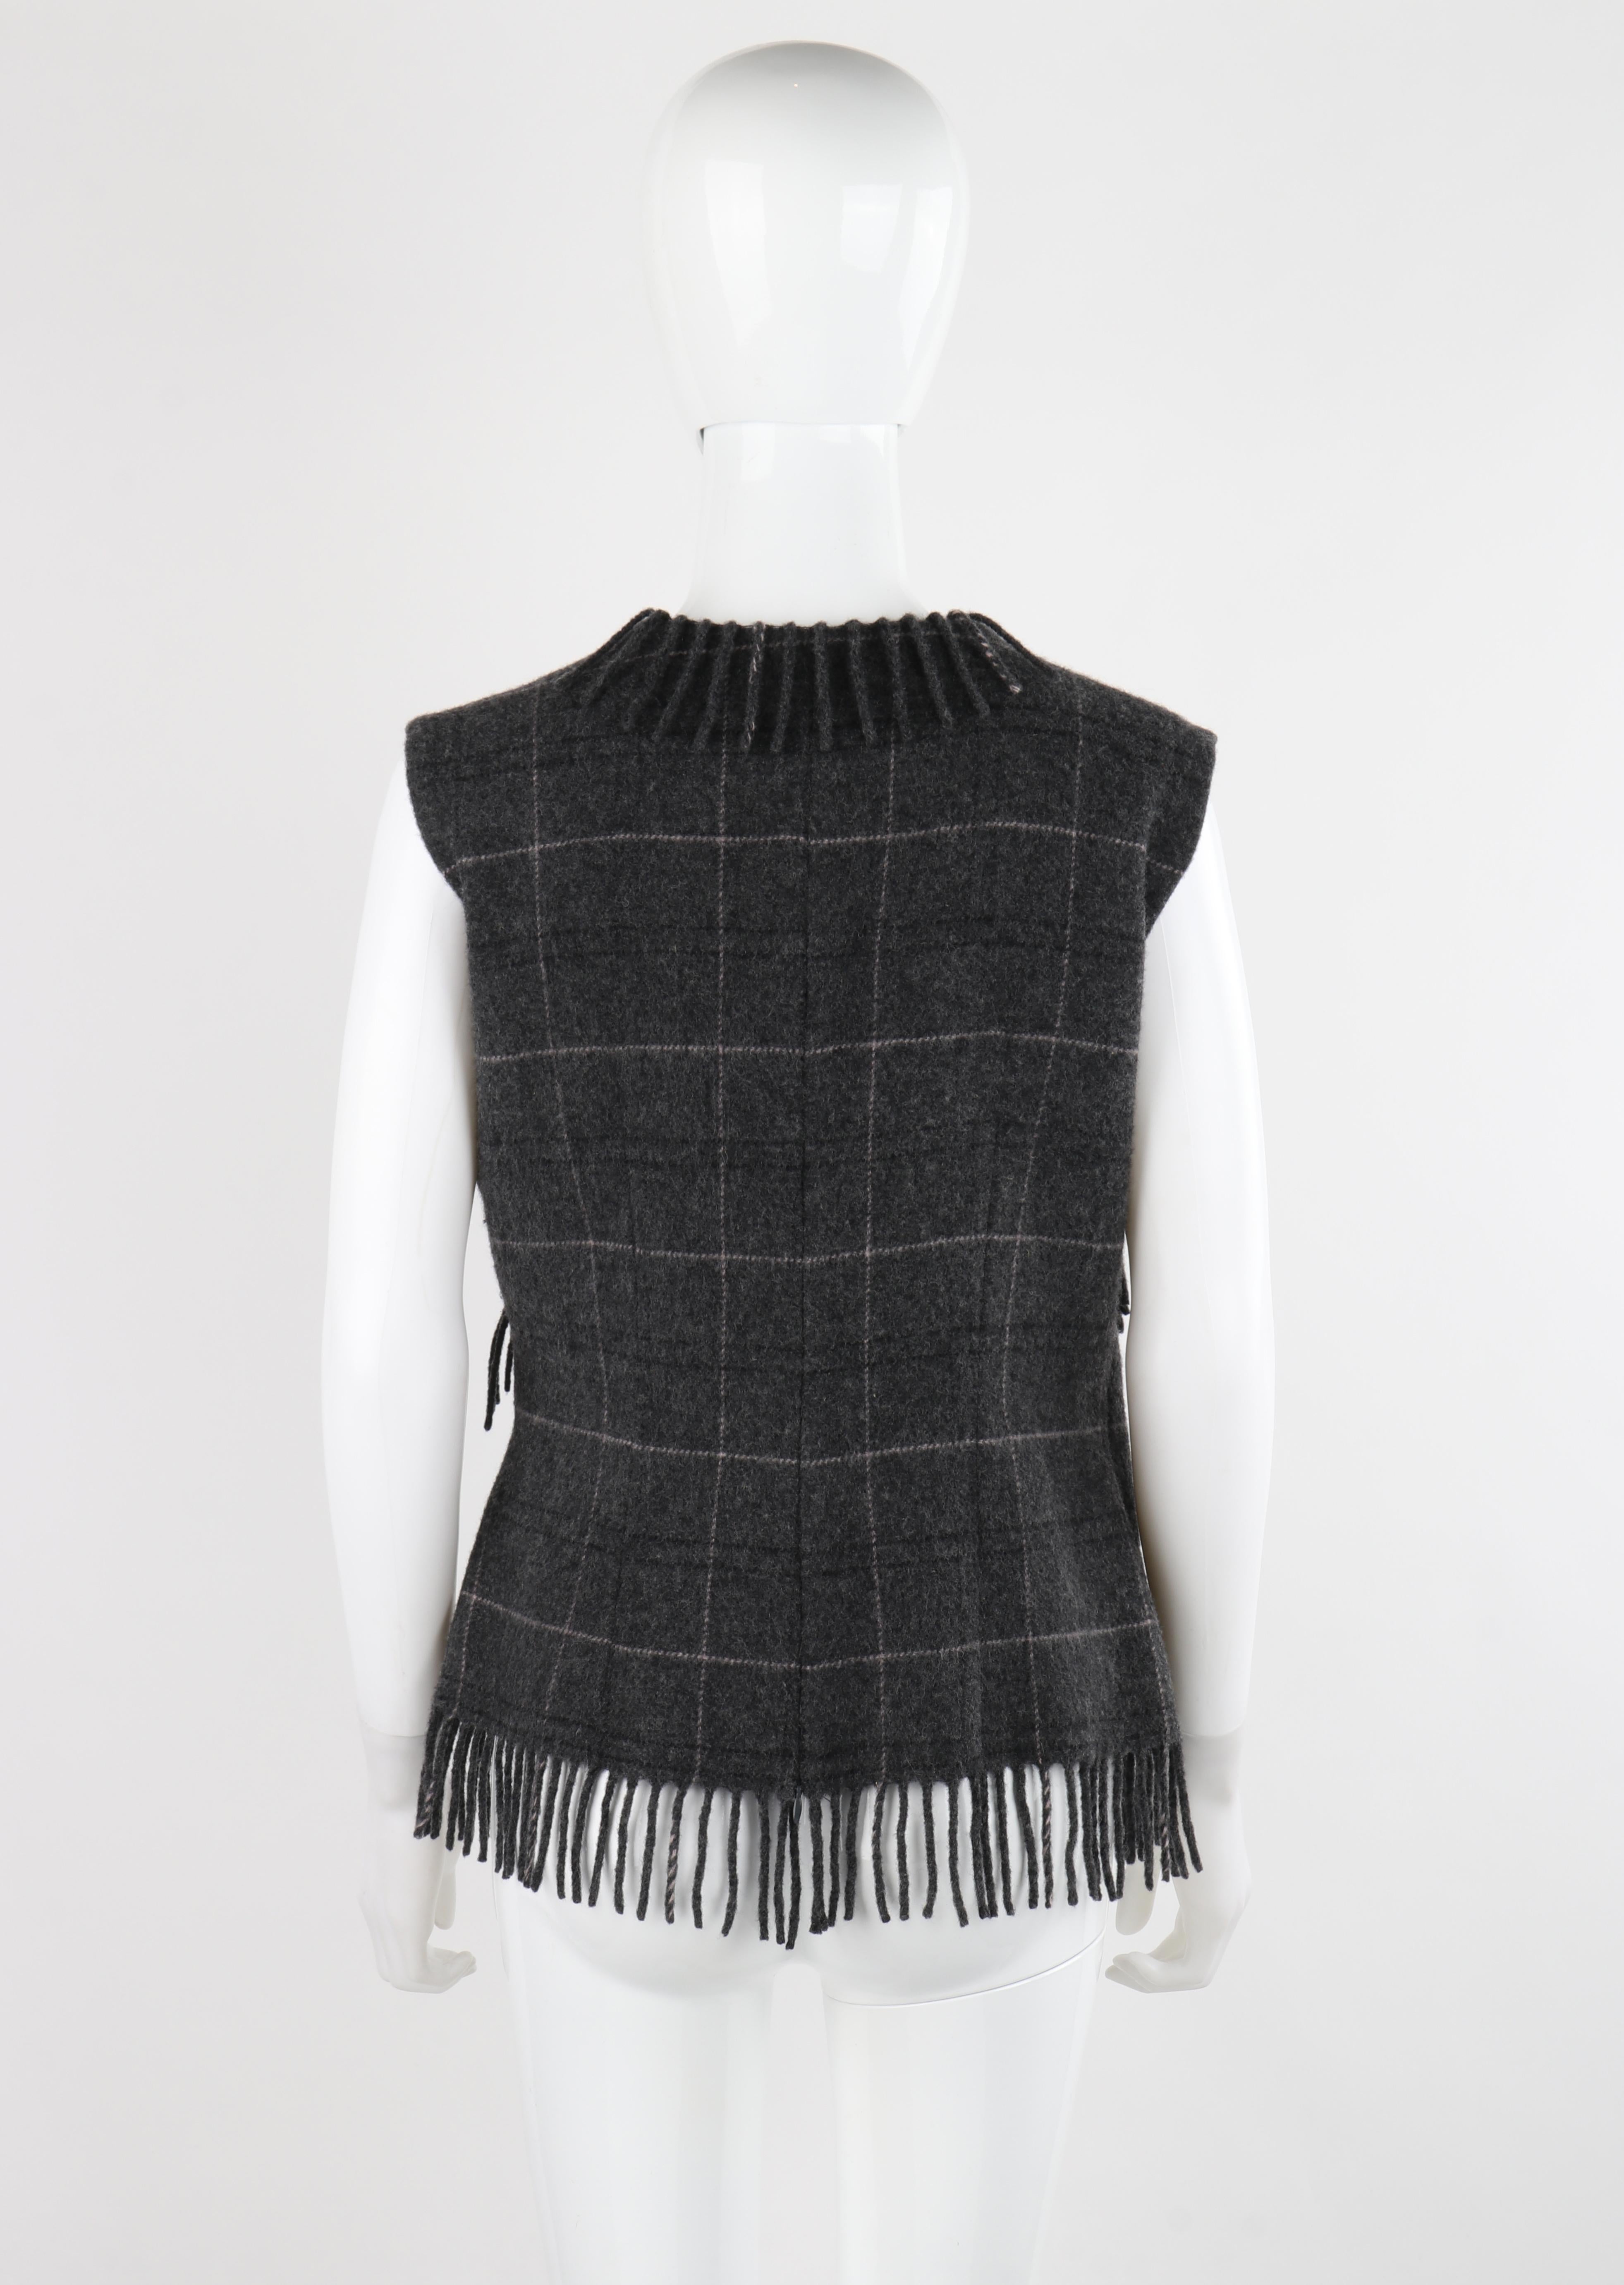 ALEXANDER McQUEEN F/W 1999 Gray Wool Plaid Wrap Fringe Sleeveless Vest Knit Top For Sale 1